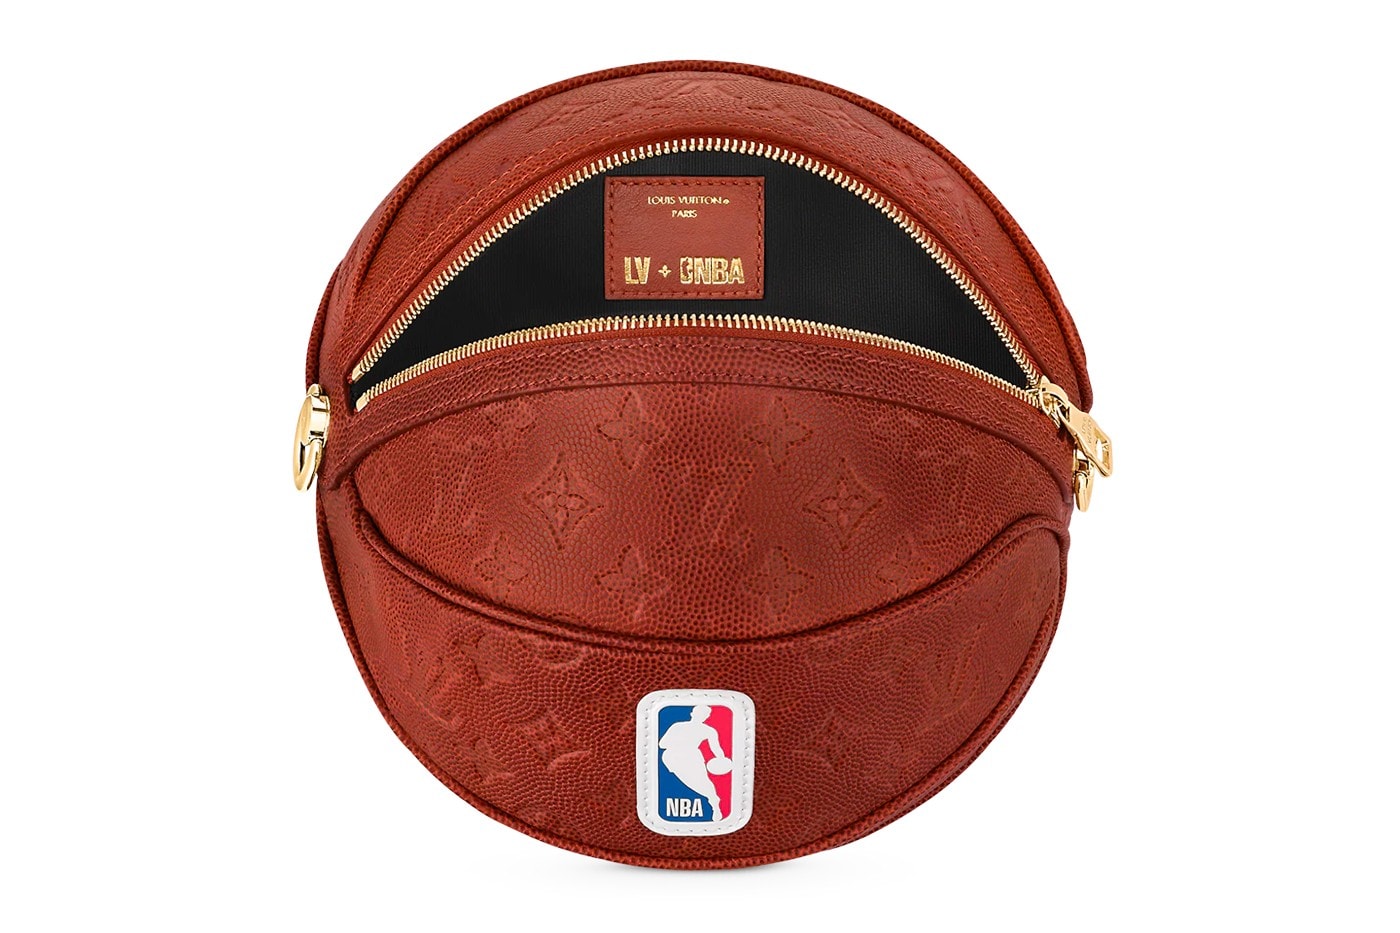 Louis Vuitton x NBA 要價 $4,450 美元「Ball in Basket」包袋正式登場